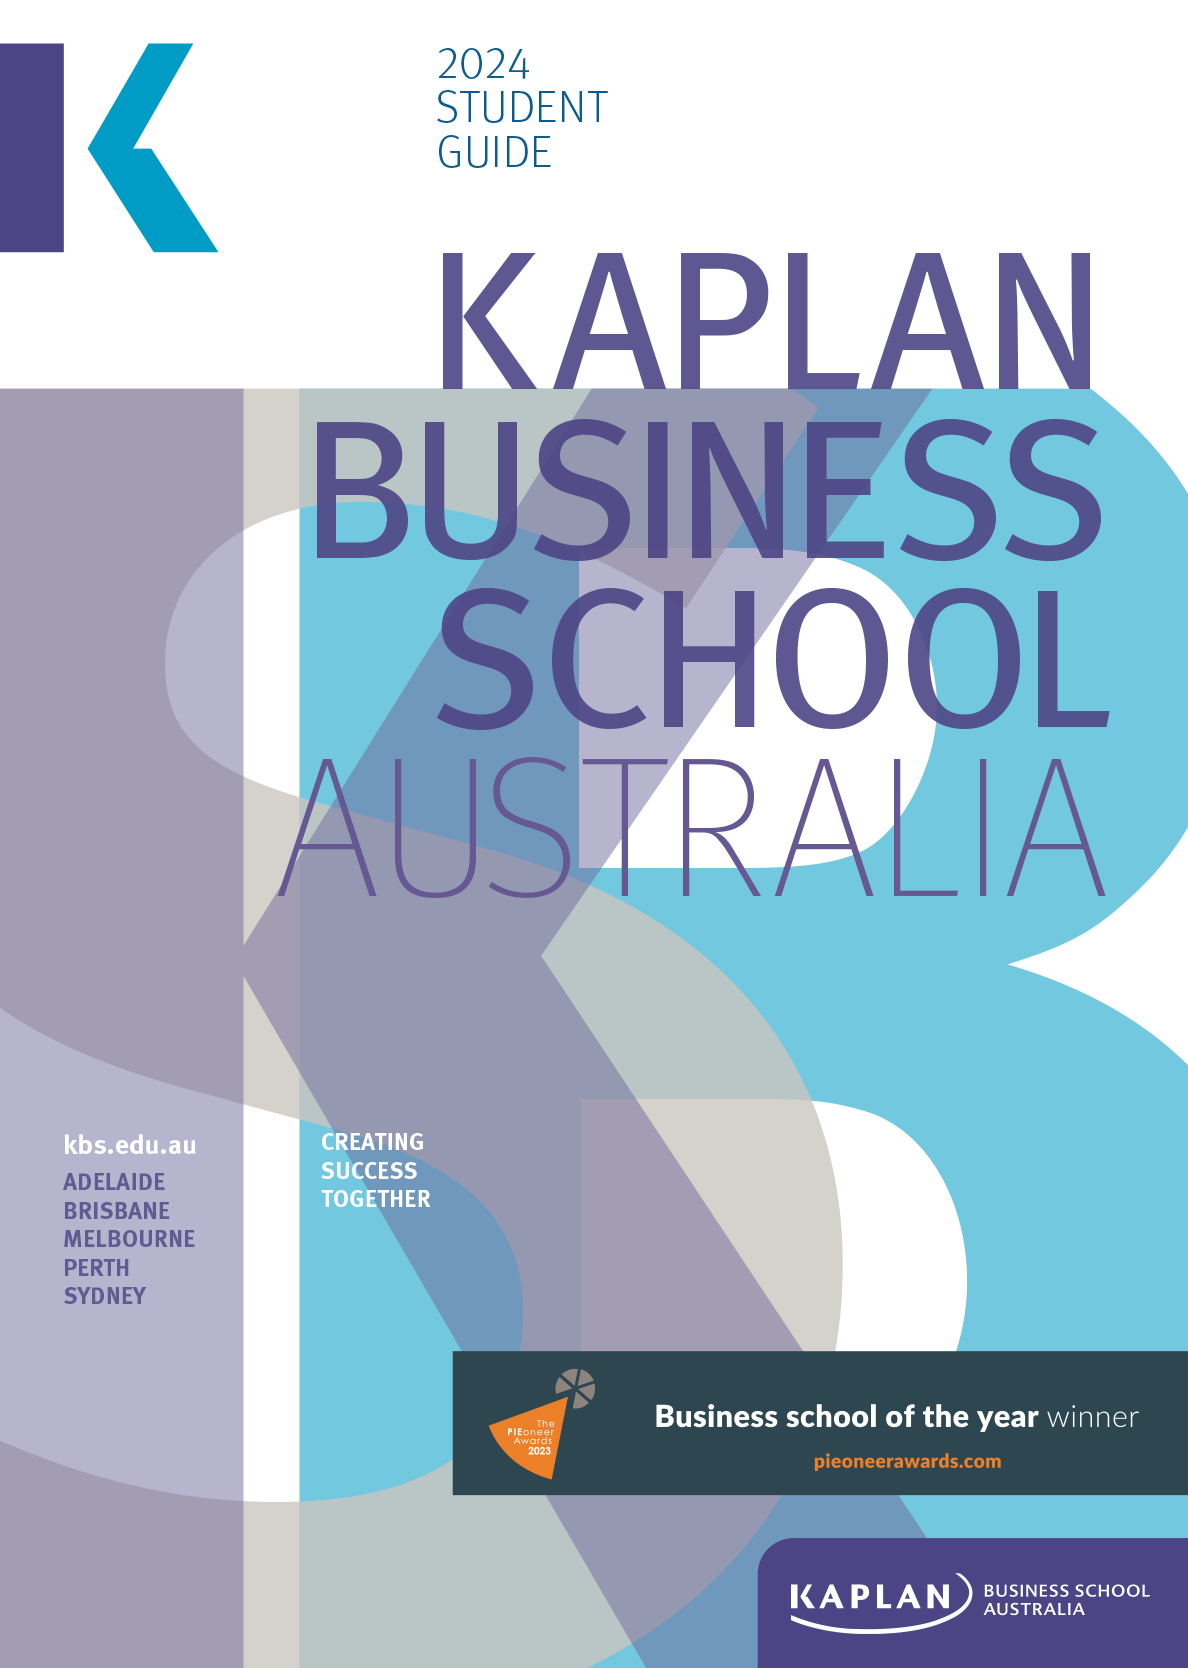 Kaplan Business School brochure / student guide